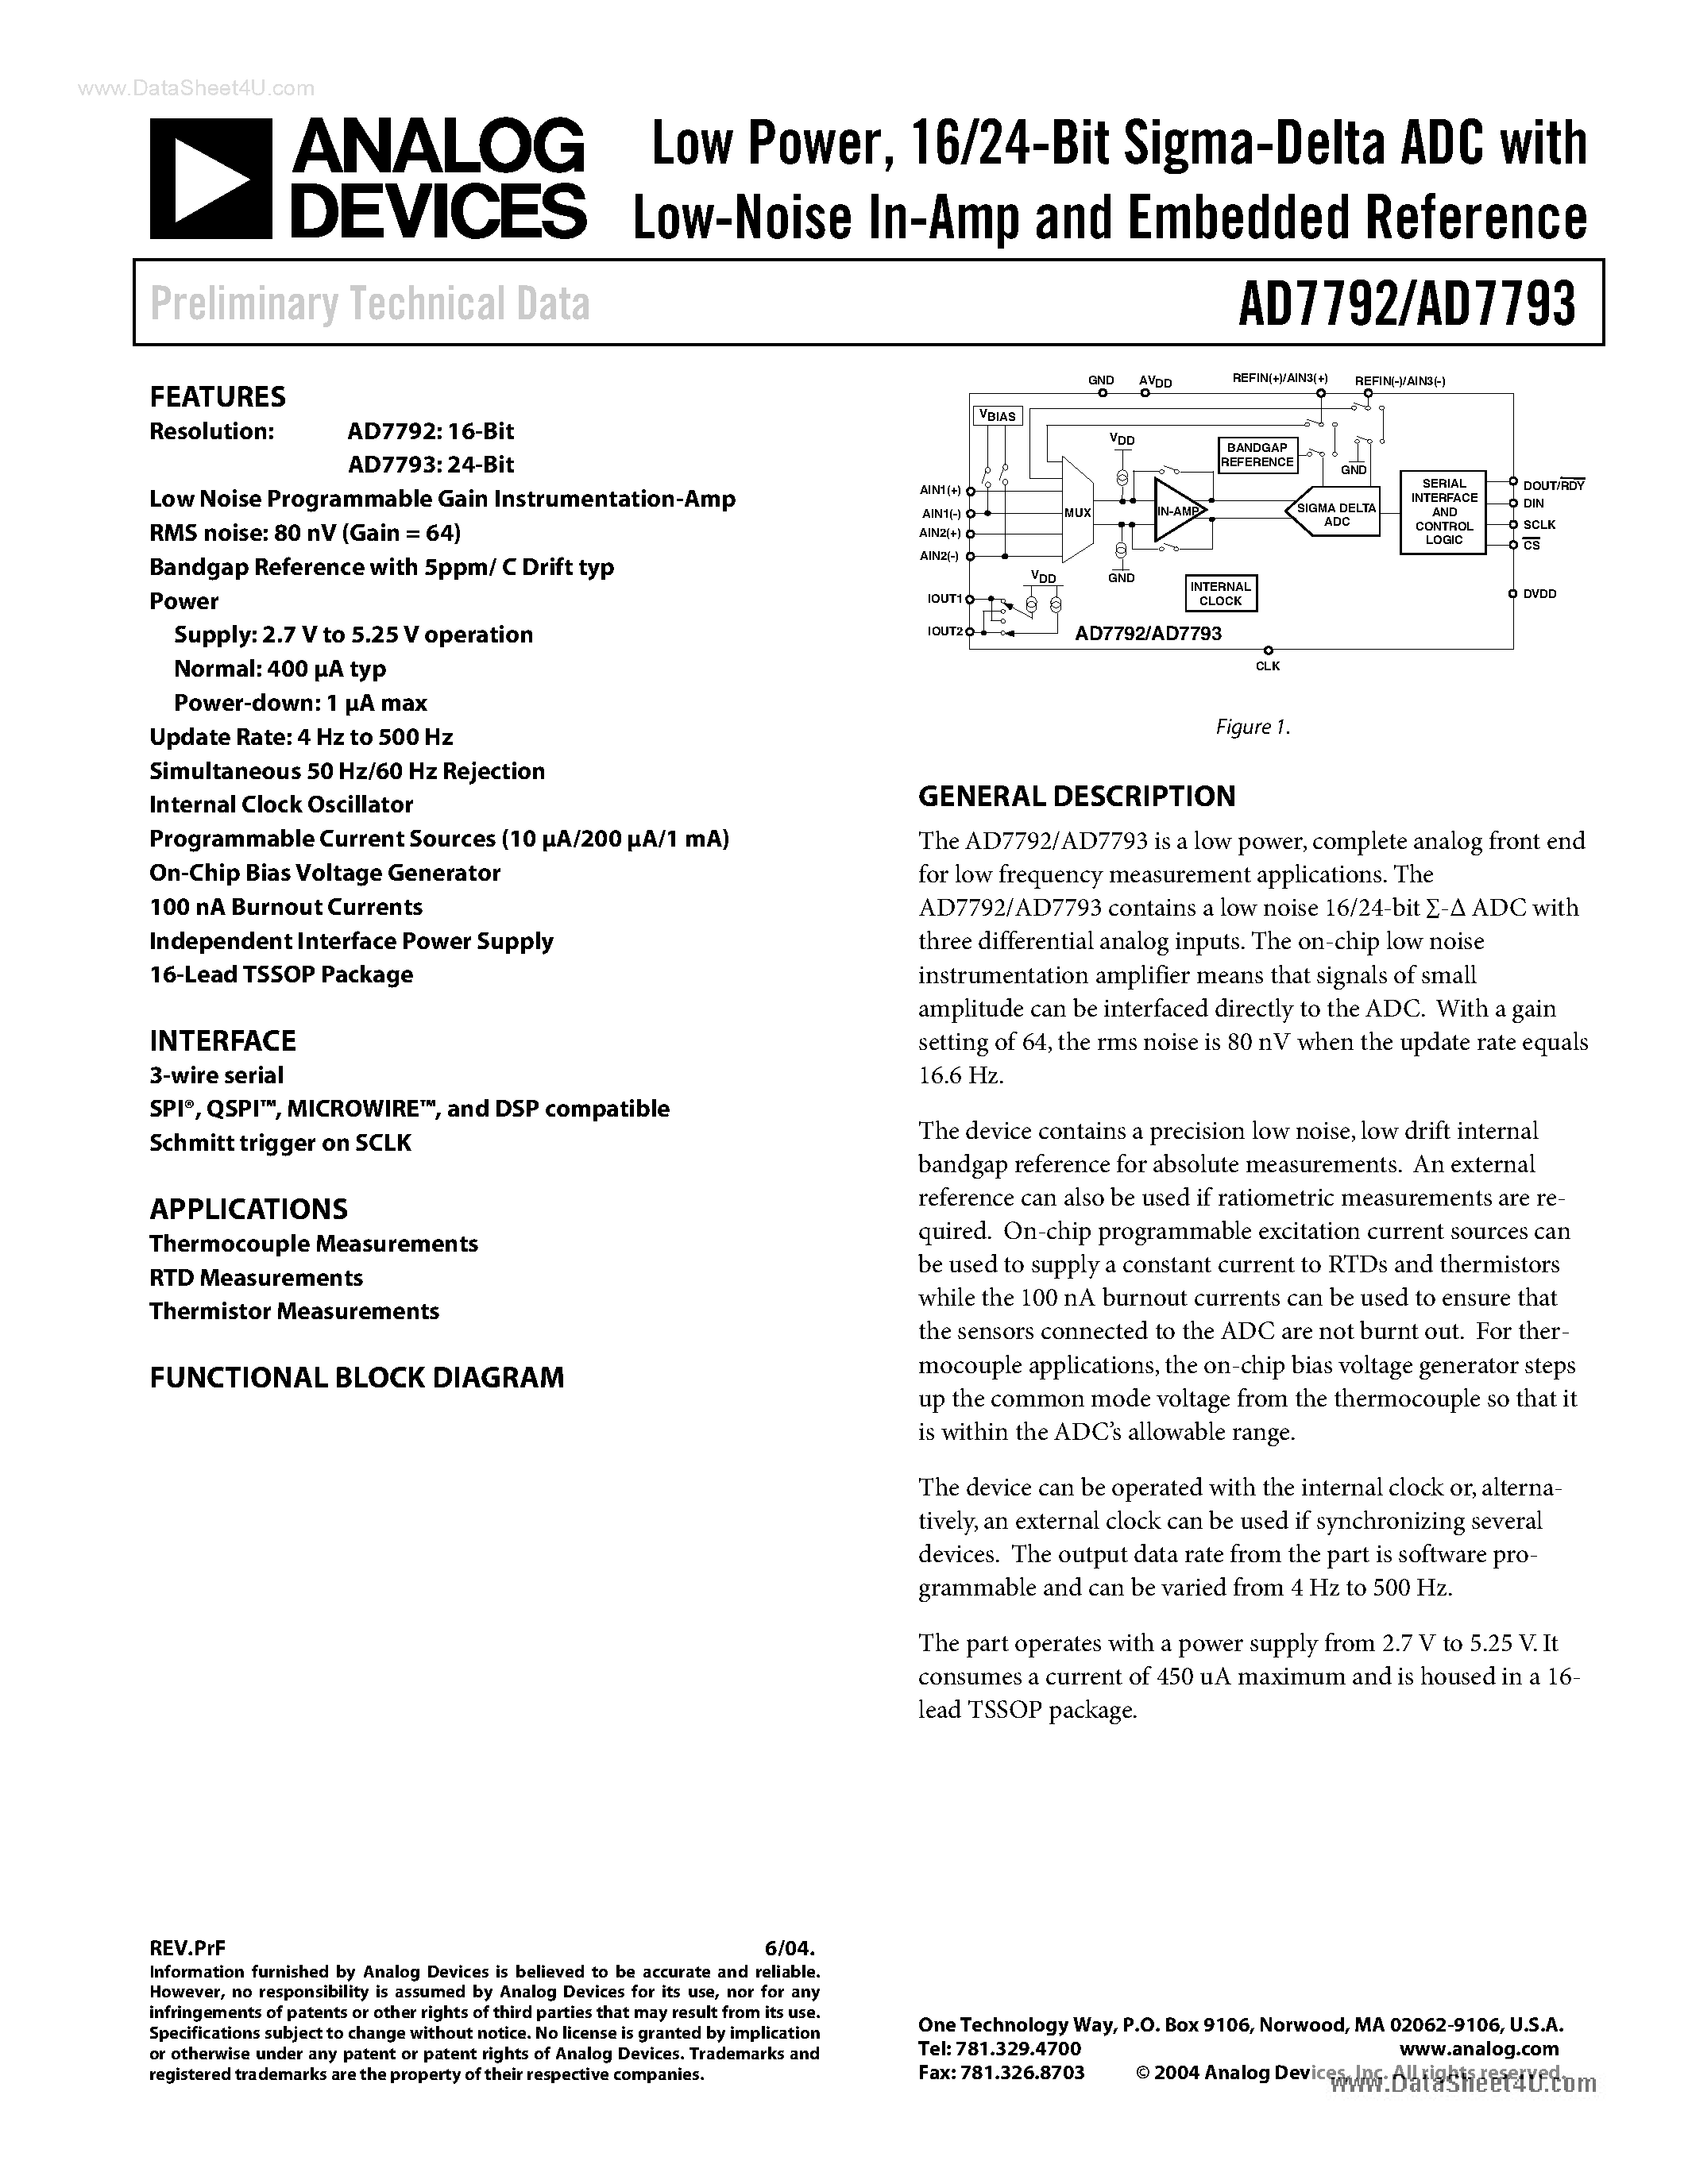 Datasheet AD7792 - (AD7792 / AD7793) 16/24-Bit Sigma-Delta ADC page 1